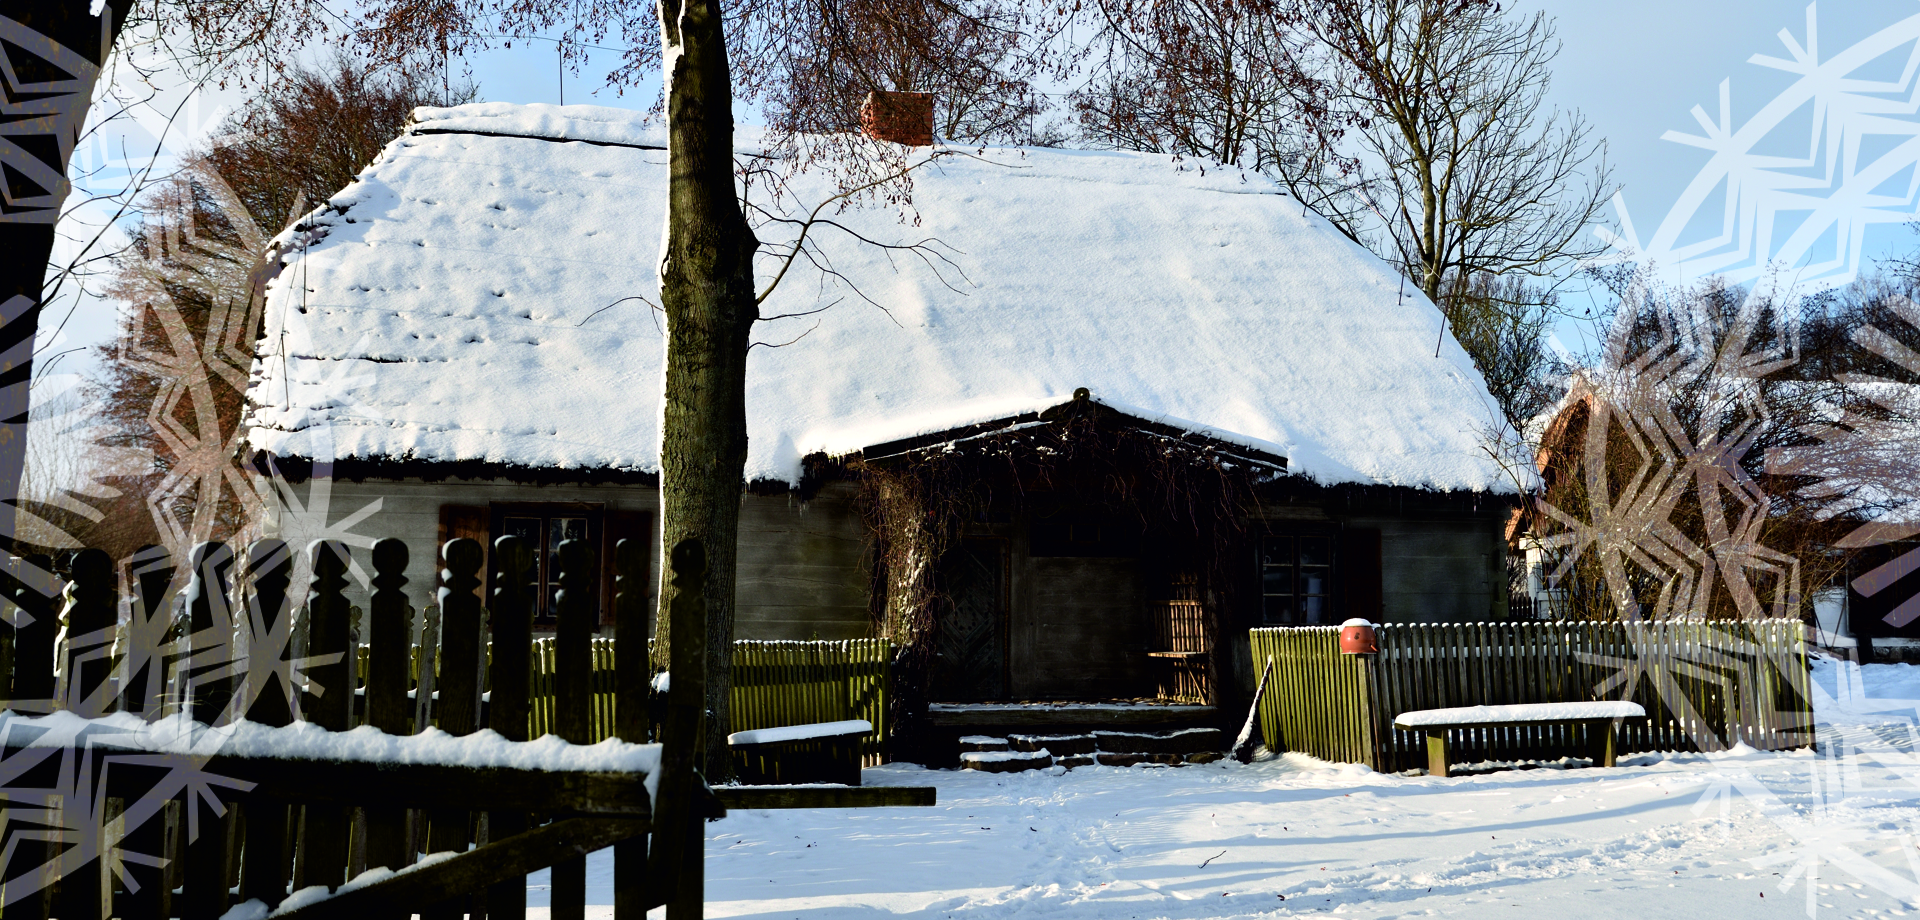 Wiejska chata zimą - skansen w Sierpcu